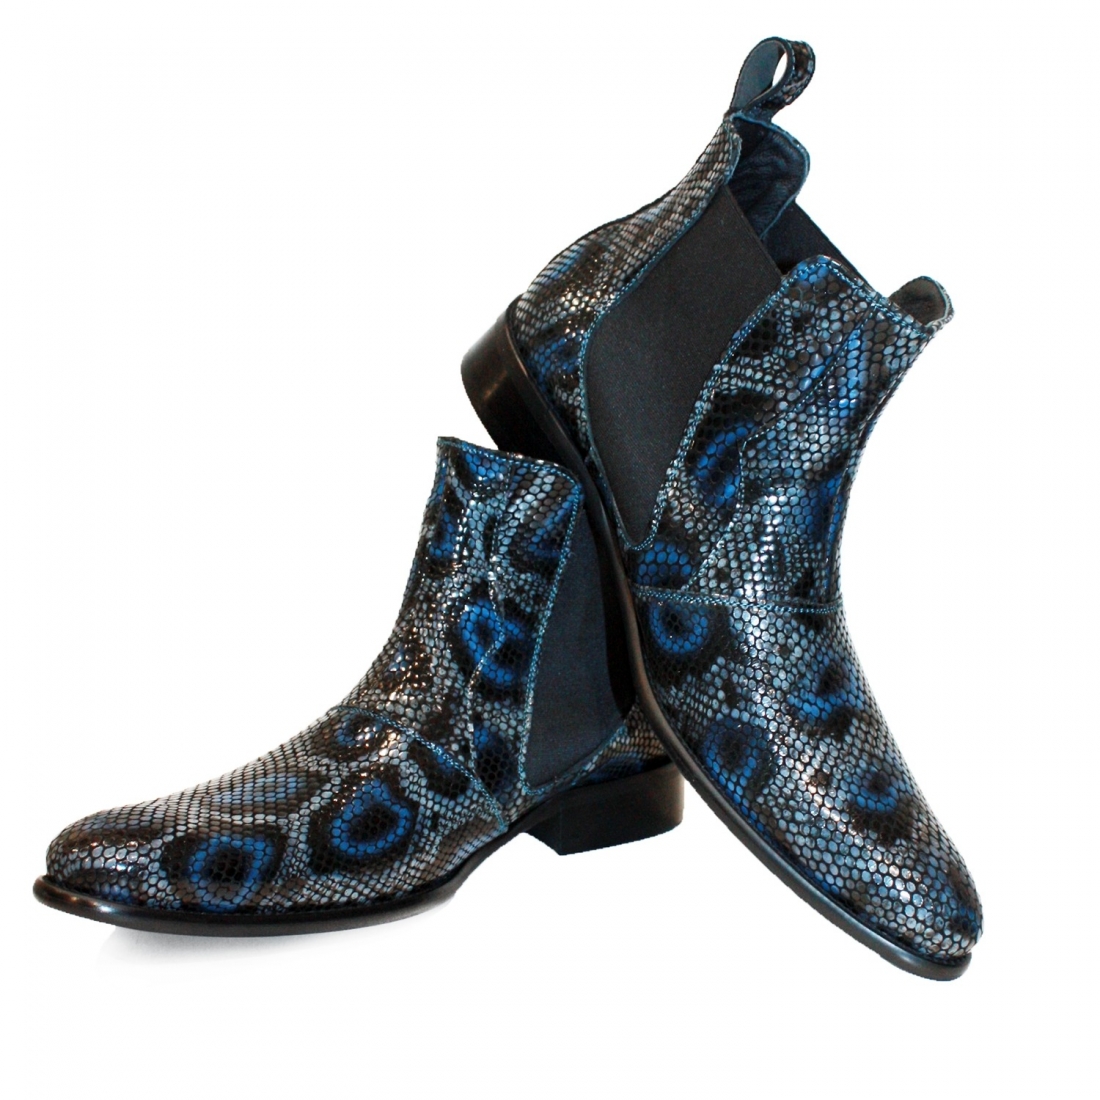 Modello Bevenerro - チェルシーブーツ - Handmade Colorful Italian Leather Shoes